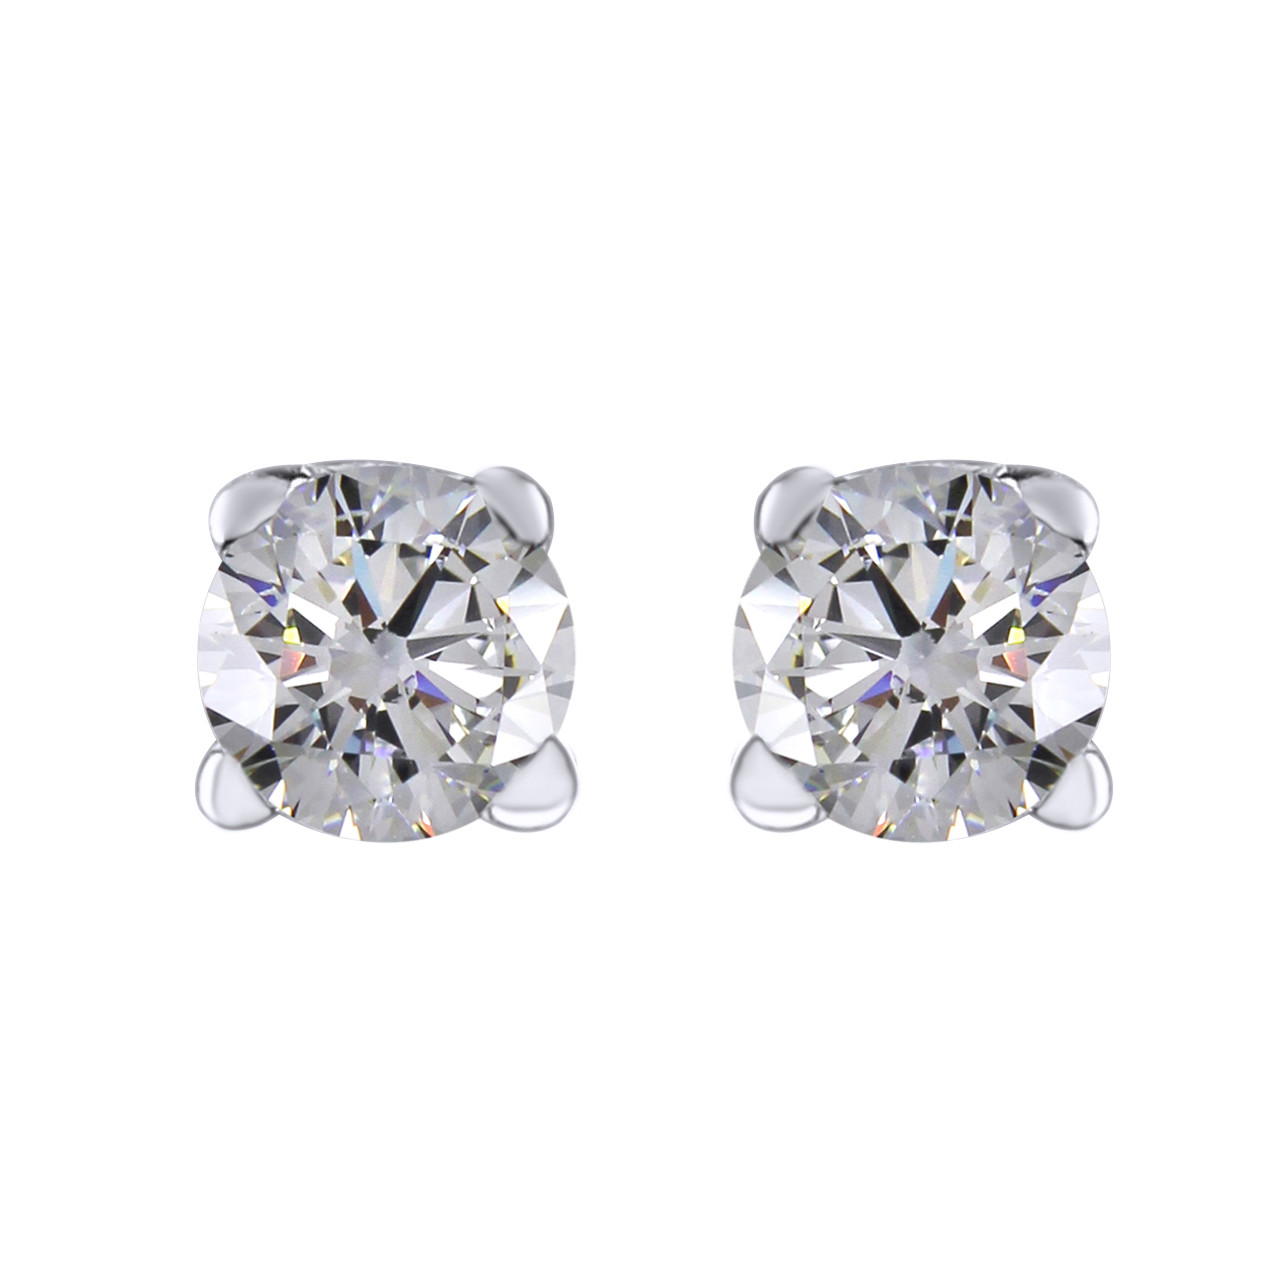 Quarter Carat Diamond Earrings
 1 4 Carat Round Cut CVD Coated Diamond Stud Earrings 10K